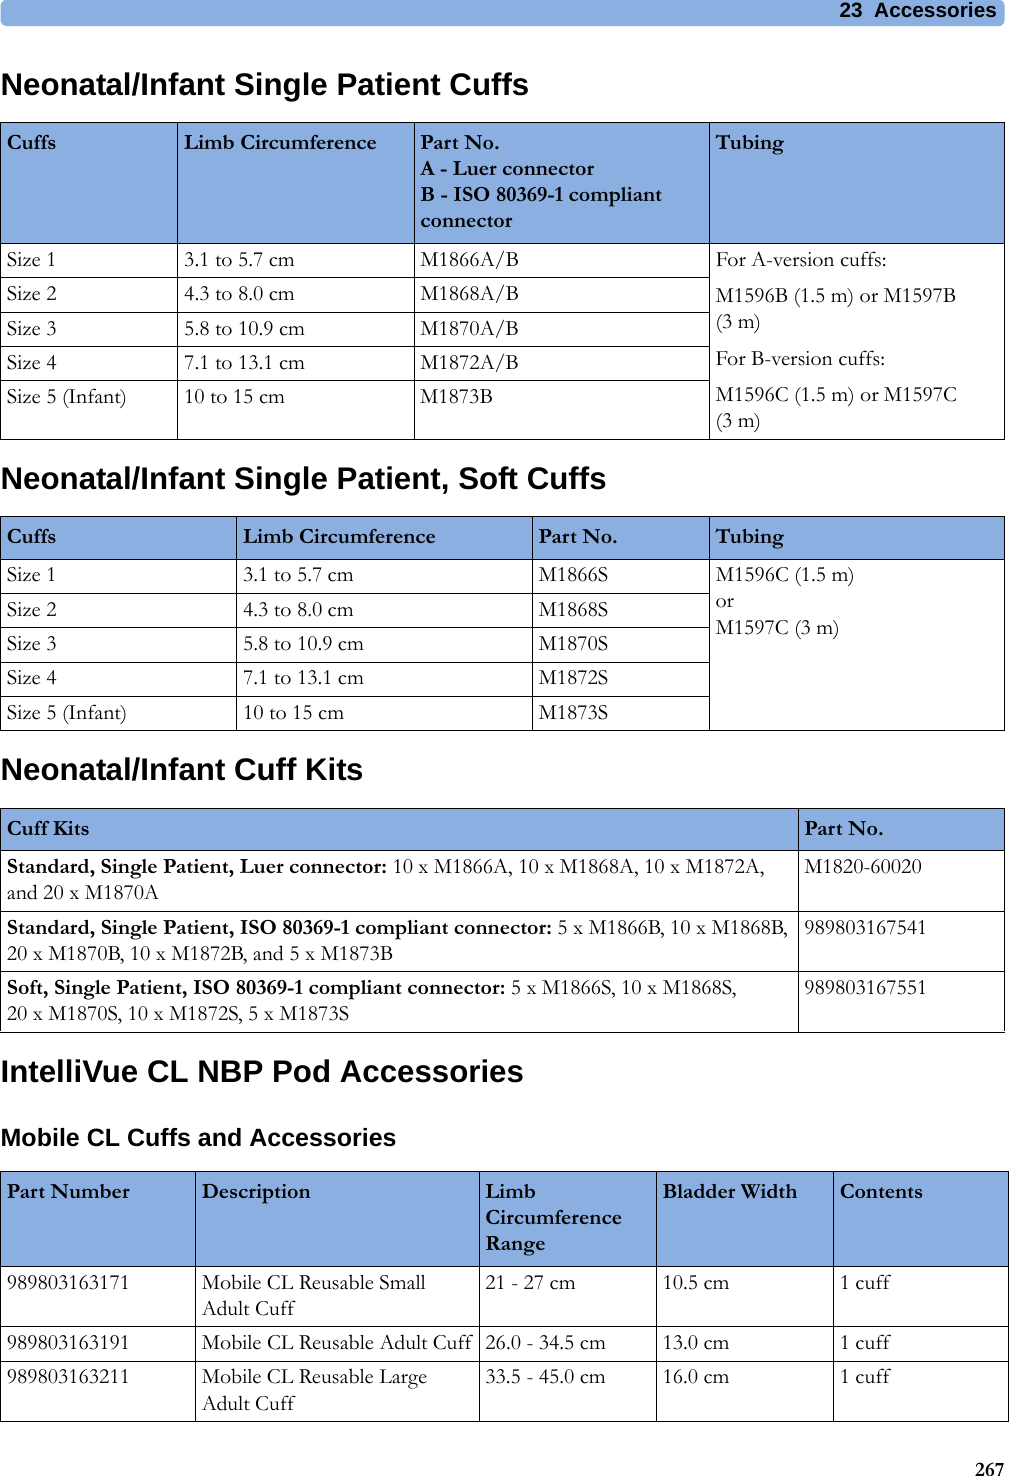 23 Accessories267Neonatal/Infant Single Patient CuffsNeonatal/Infant Single Patient, Soft CuffsNeonatal/Infant Cuff KitsIntelliVue CL NBP Pod AccessoriesMobile CL Cuffs and AccessoriesCuffs Limb Circumference Part No.A - Luer connectorB - ISO 80369-1 compliant connectorTubingSize 1 3.1 to 5.7 cm M1866A/B For A-version cuffs:M1596B (1.5 m) or M1597B (3 m)For B-version cuffs:M1596C (1.5 m) or M1597C (3 m)Size 2 4.3 to 8.0 cm M1868A/BSize 3 5.8 to 10.9 cm M1870A/BSize 4 7.1 to 13.1 cm M1872A/BSize 5 (Infant) 10 to 15 cm M1873BCuffs Limb Circumference Part No. TubingSize 1 3.1 to 5.7 cm M1866S M1596C (1.5 m) orM1597C (3 m)Size 2 4.3 to 8.0 cm M1868SSize 3 5.8 to 10.9 cm M1870SSize 4 7.1 to 13.1 cm M1872SSize 5 (Infant) 10 to 15 cm M1873SCuff Kits Part No.Standard, Single Patient, Luer connector: 10 x M1866A, 10 x M1868A, 10 x M1872A, and 20 x M1870AM1820-60020Standard, Single Patient, ISO 80369-1 compliant connector: 5 x M1866B, 10 x M1868B, 20 x M1870B, 10 x M1872B, and 5 x M1873B989803167541Soft, Single Patient, ISO 80369-1 compliant connector: 5 x M1866S, 10 x M1868S, 20 x M1870S, 10 x M1872S, 5 x M1873S989803167551Part Number Description Limb Circumference RangeBladder Width Contents989803163171 Mobile CL Reusable Small Adult Cuff21 - 27 cm 10.5 cm 1 cuff989803163191 Mobile CL Reusable Adult Cuff 26.0 - 34.5 cm 13.0 cm 1 cuff989803163211 Mobile CL Reusable Large Adult Cuff33.5 - 45.0 cm 16.0 cm 1 cuff